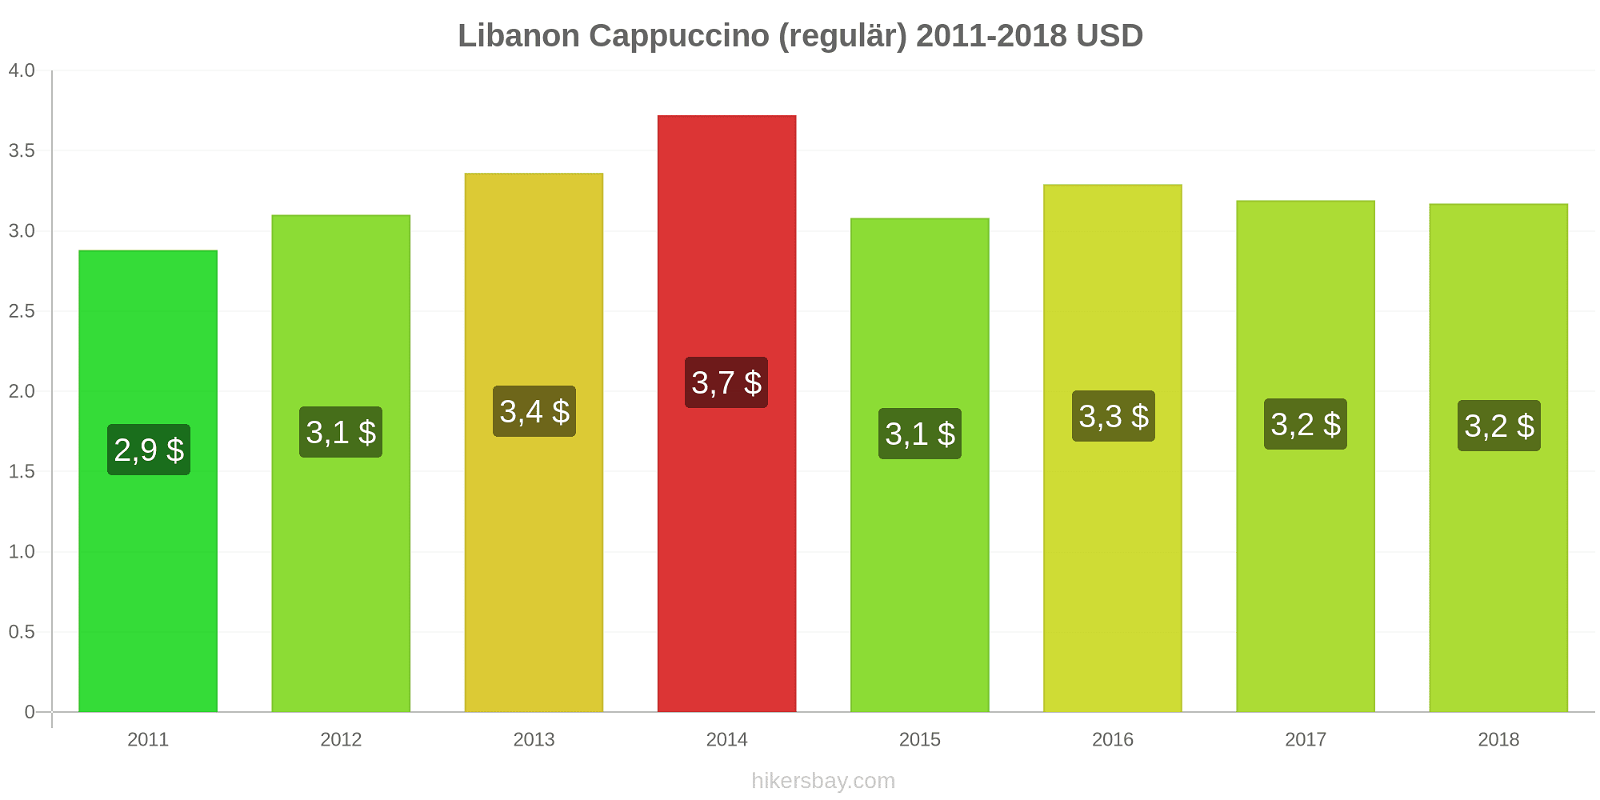 Libanon Preisänderungen Cappuccino (regulär) hikersbay.com